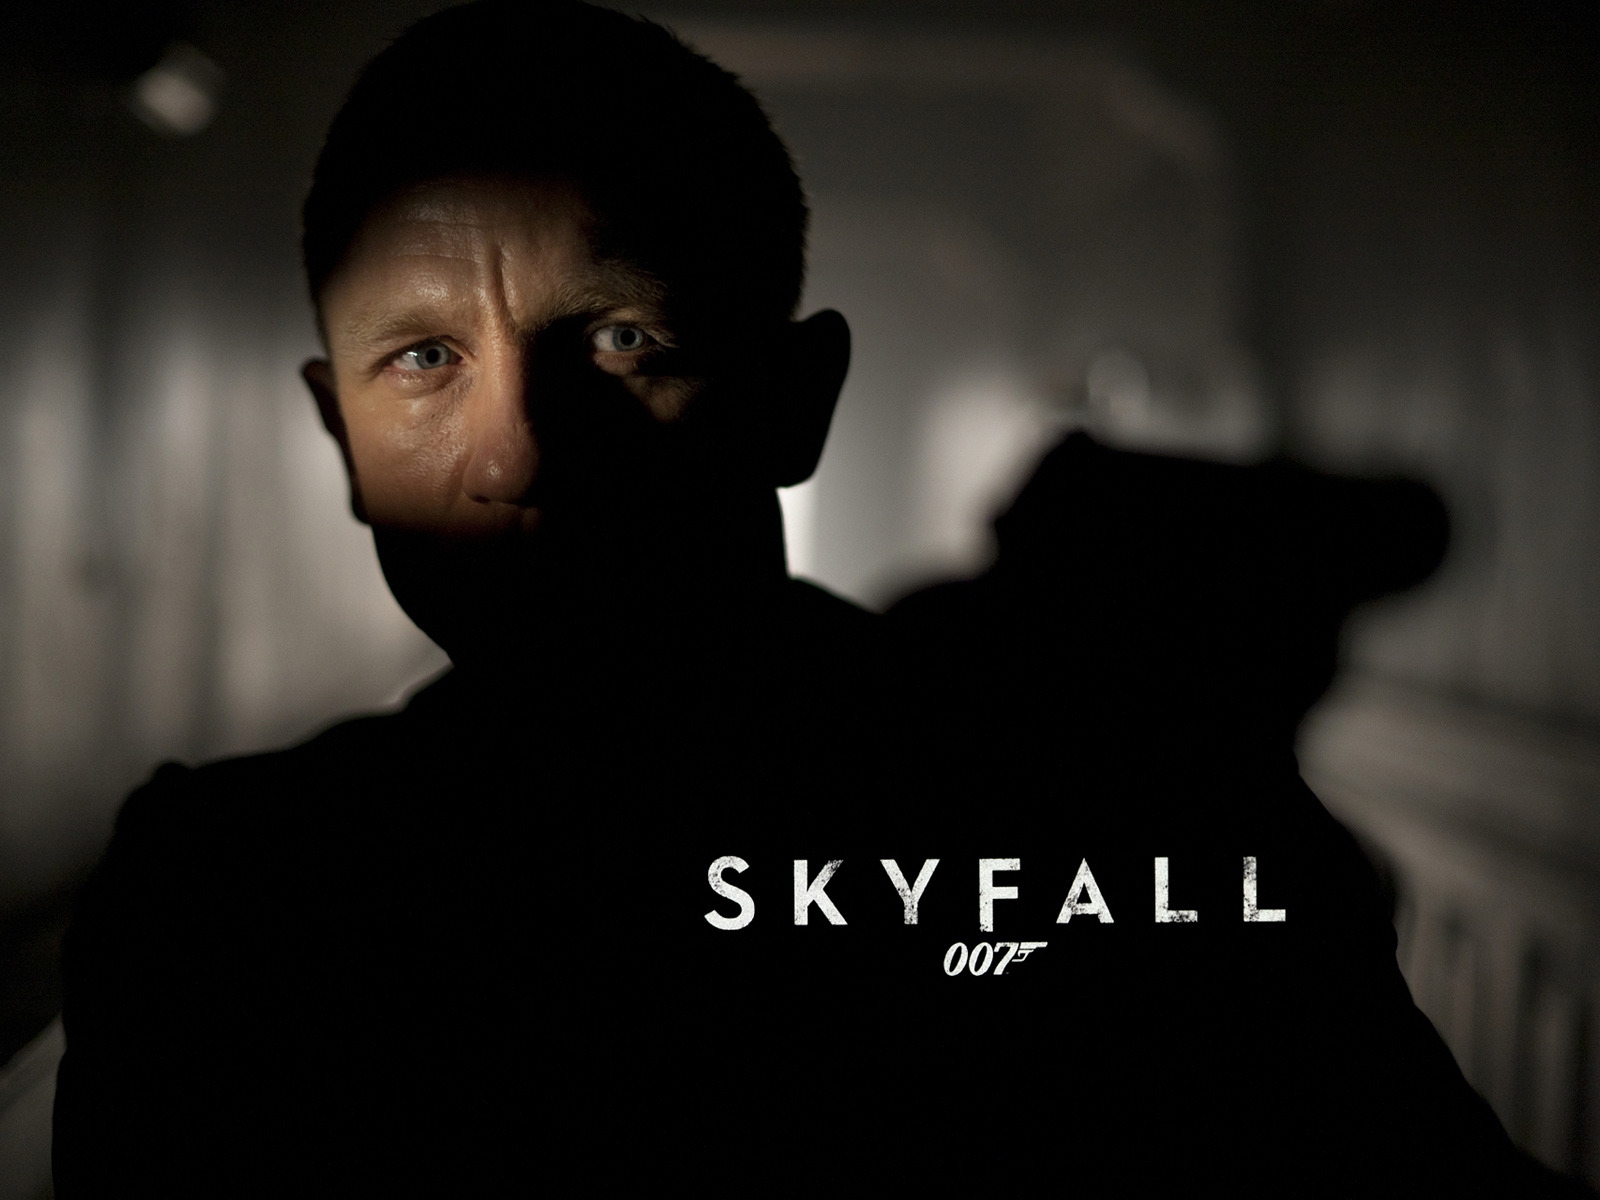 Skyfall 007 for 1600 x 1200 resolution